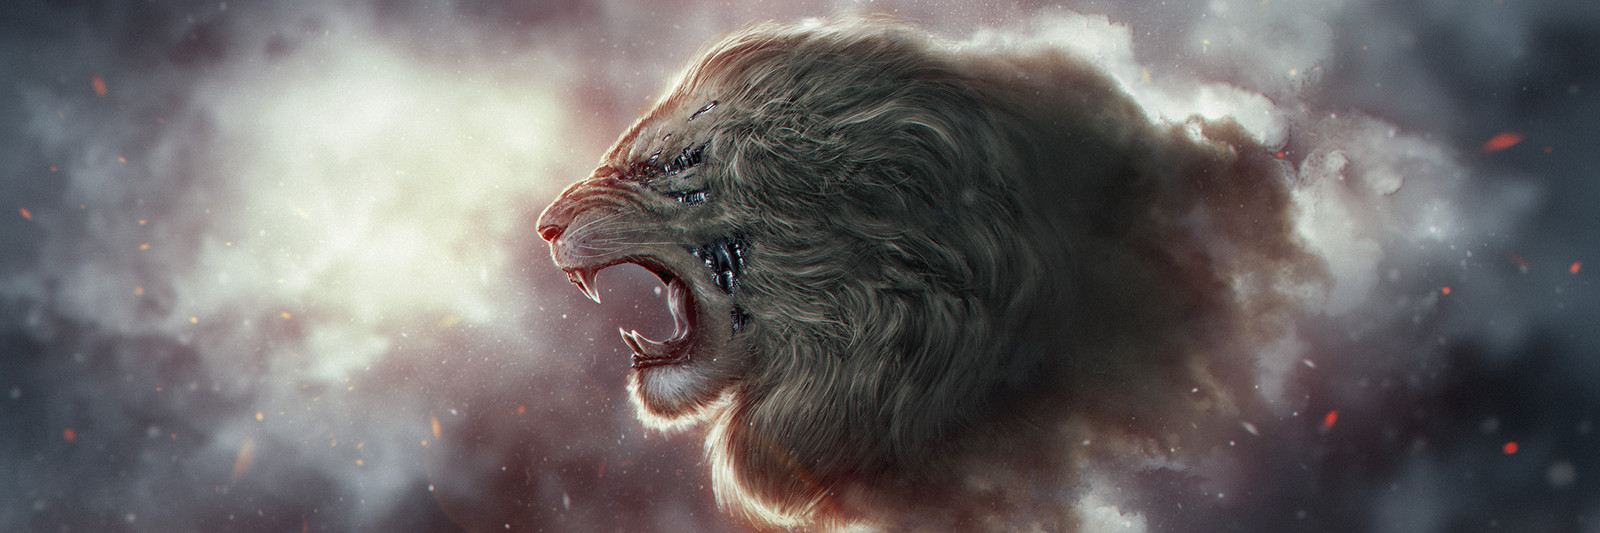 Lionheart - War Tribe Gear